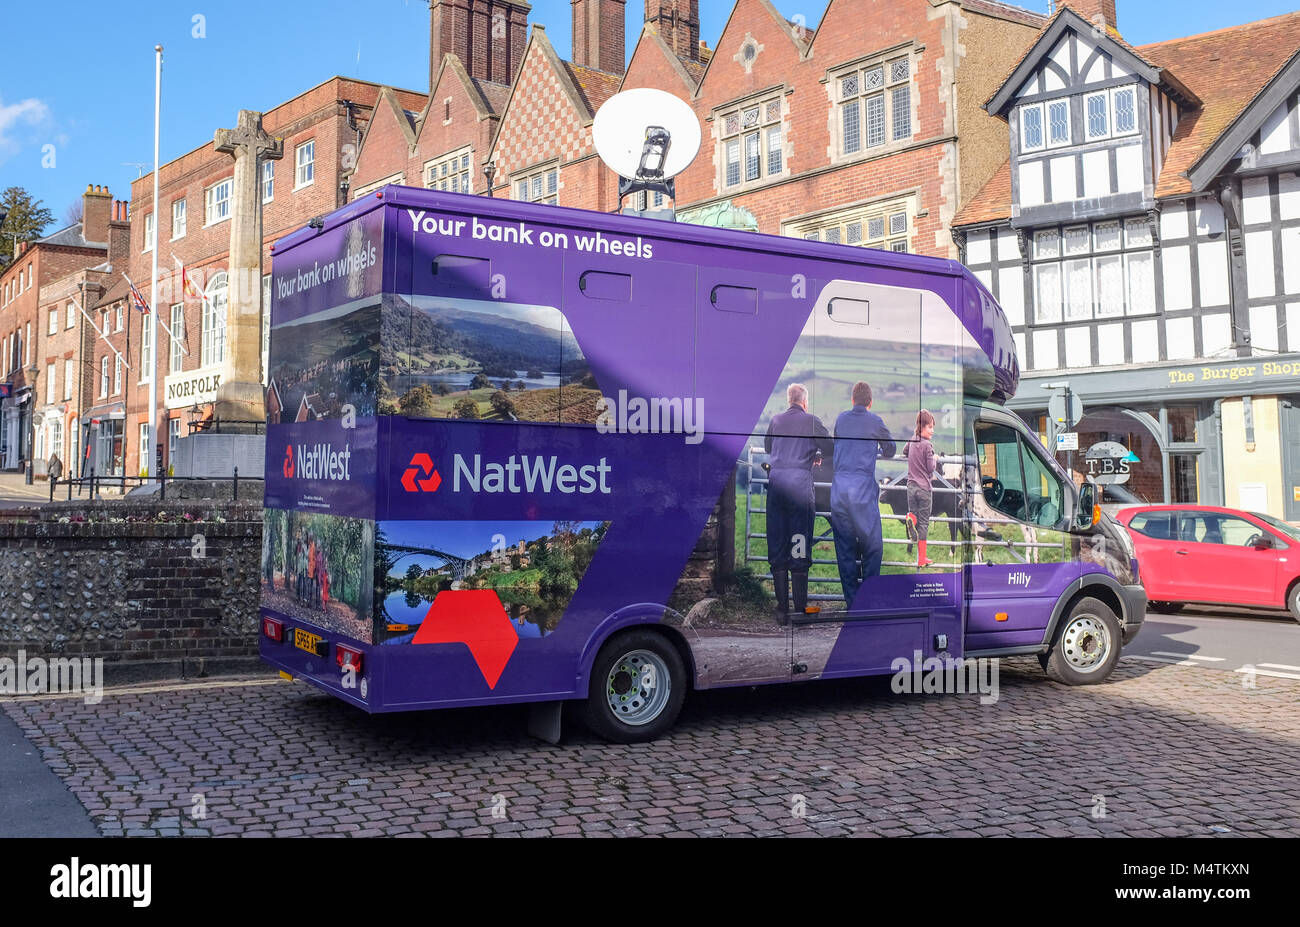 Arundel West Sussex UK Februar 2018 - NatWest mobile Bank auf Rädern Stockfoto